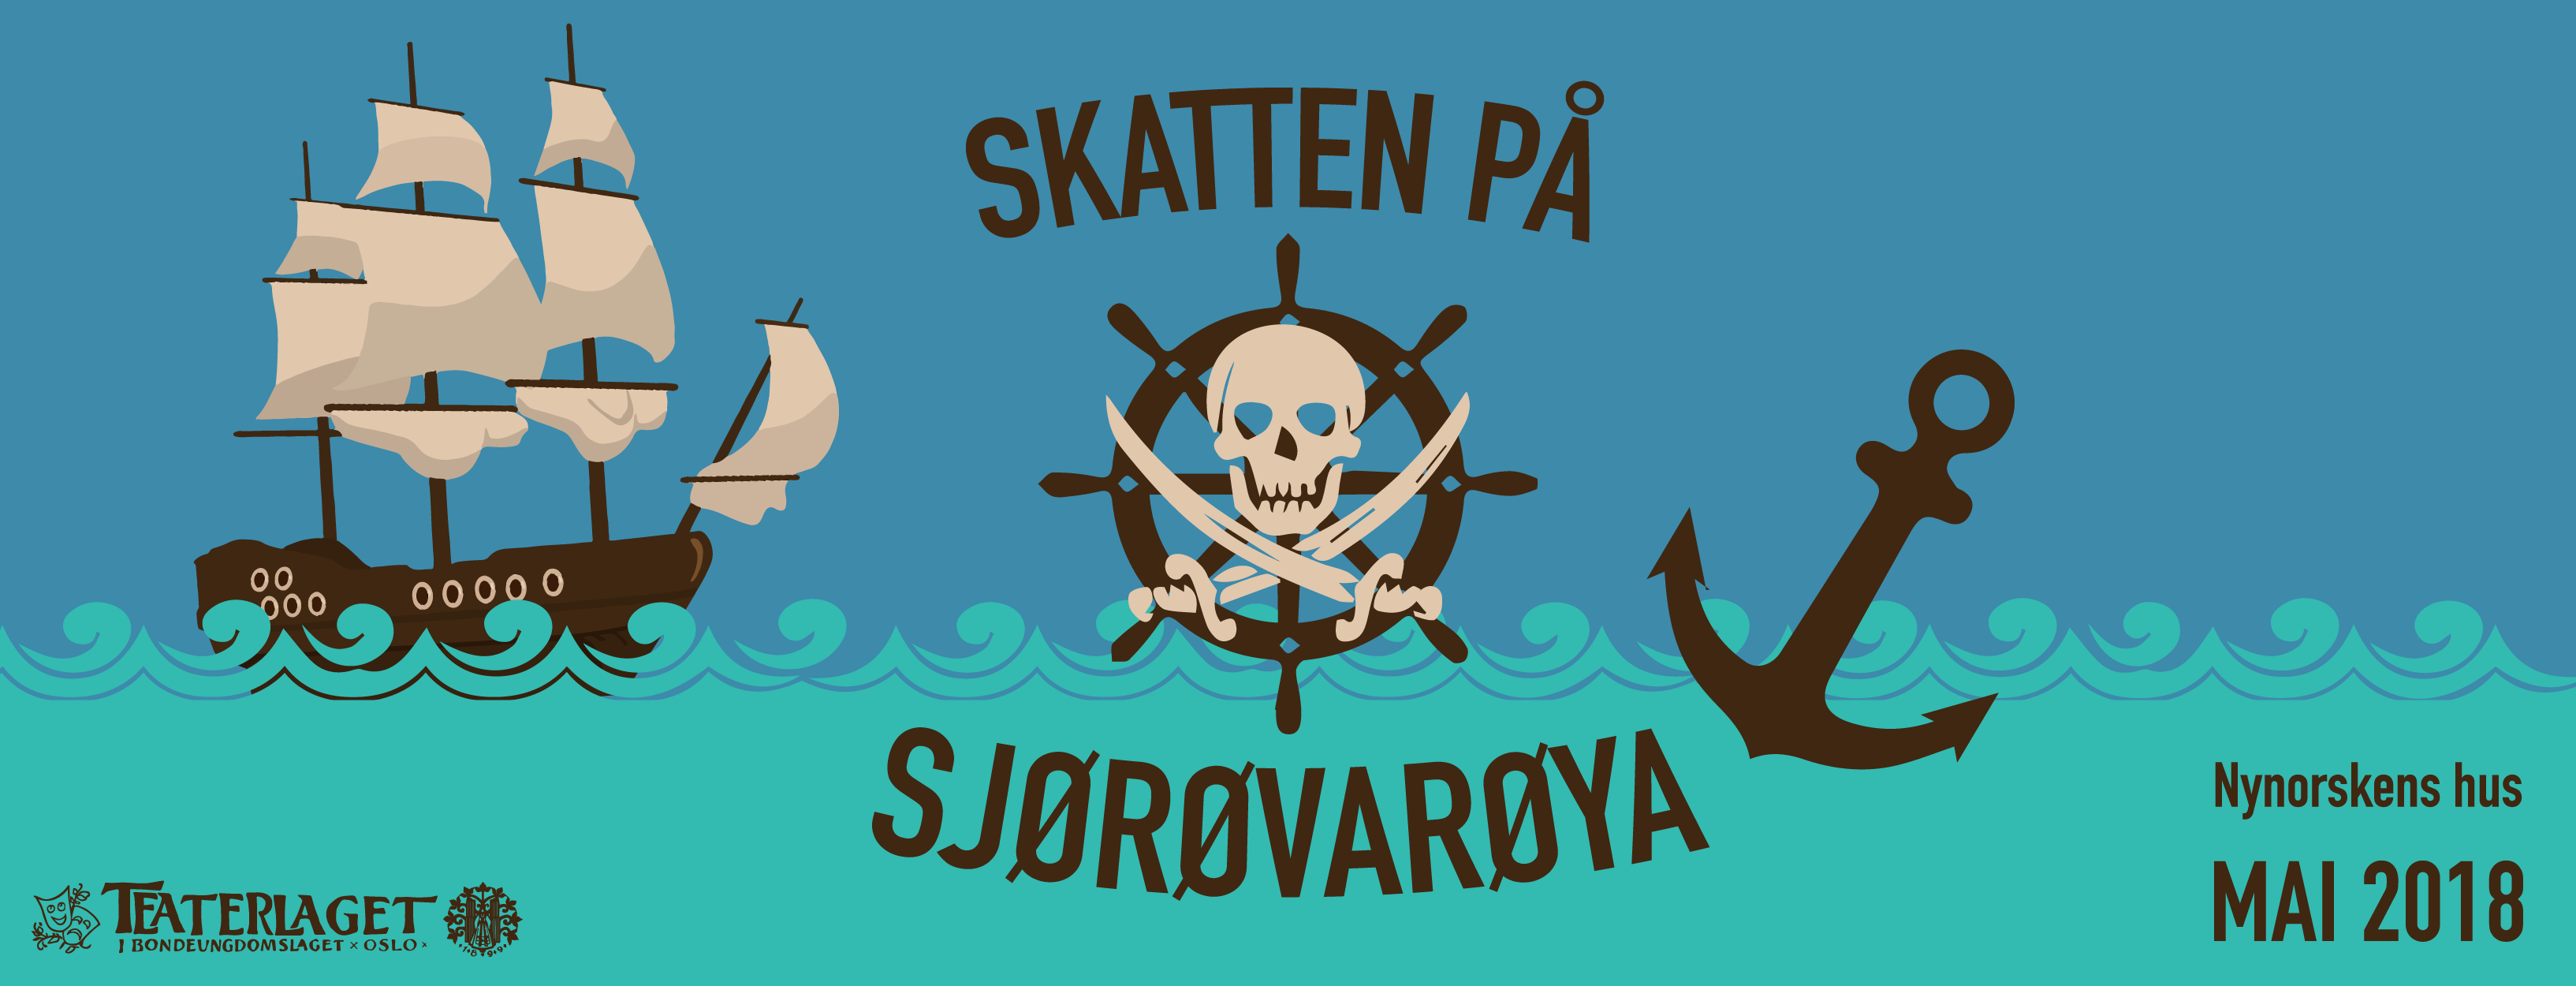 Skatten på Sjørøvarøya